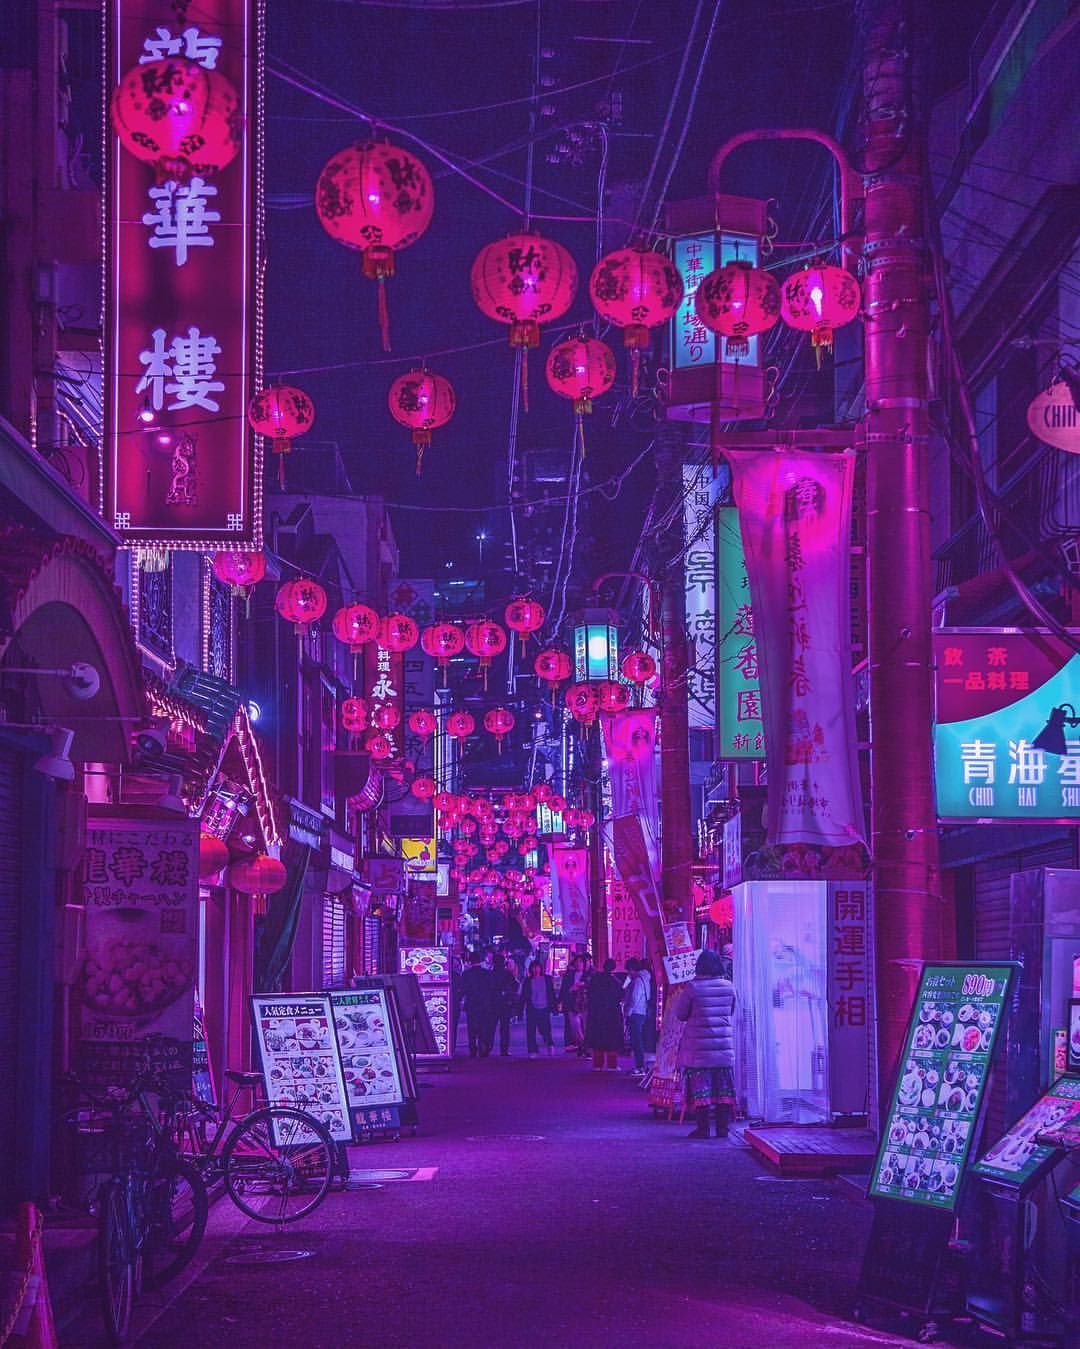  China Hintergrundbild 1080x1349. Justin Case on X: List of Best Black Neon Wallpaper Phone Wallpaper Yoshito Hasaka / 羽坂譲人 on Instagram: “Purple China. .. .. #nightphotography #rsa_streetview #meistershots #AGameofTones #citypicz #citykillerz #CBViews #